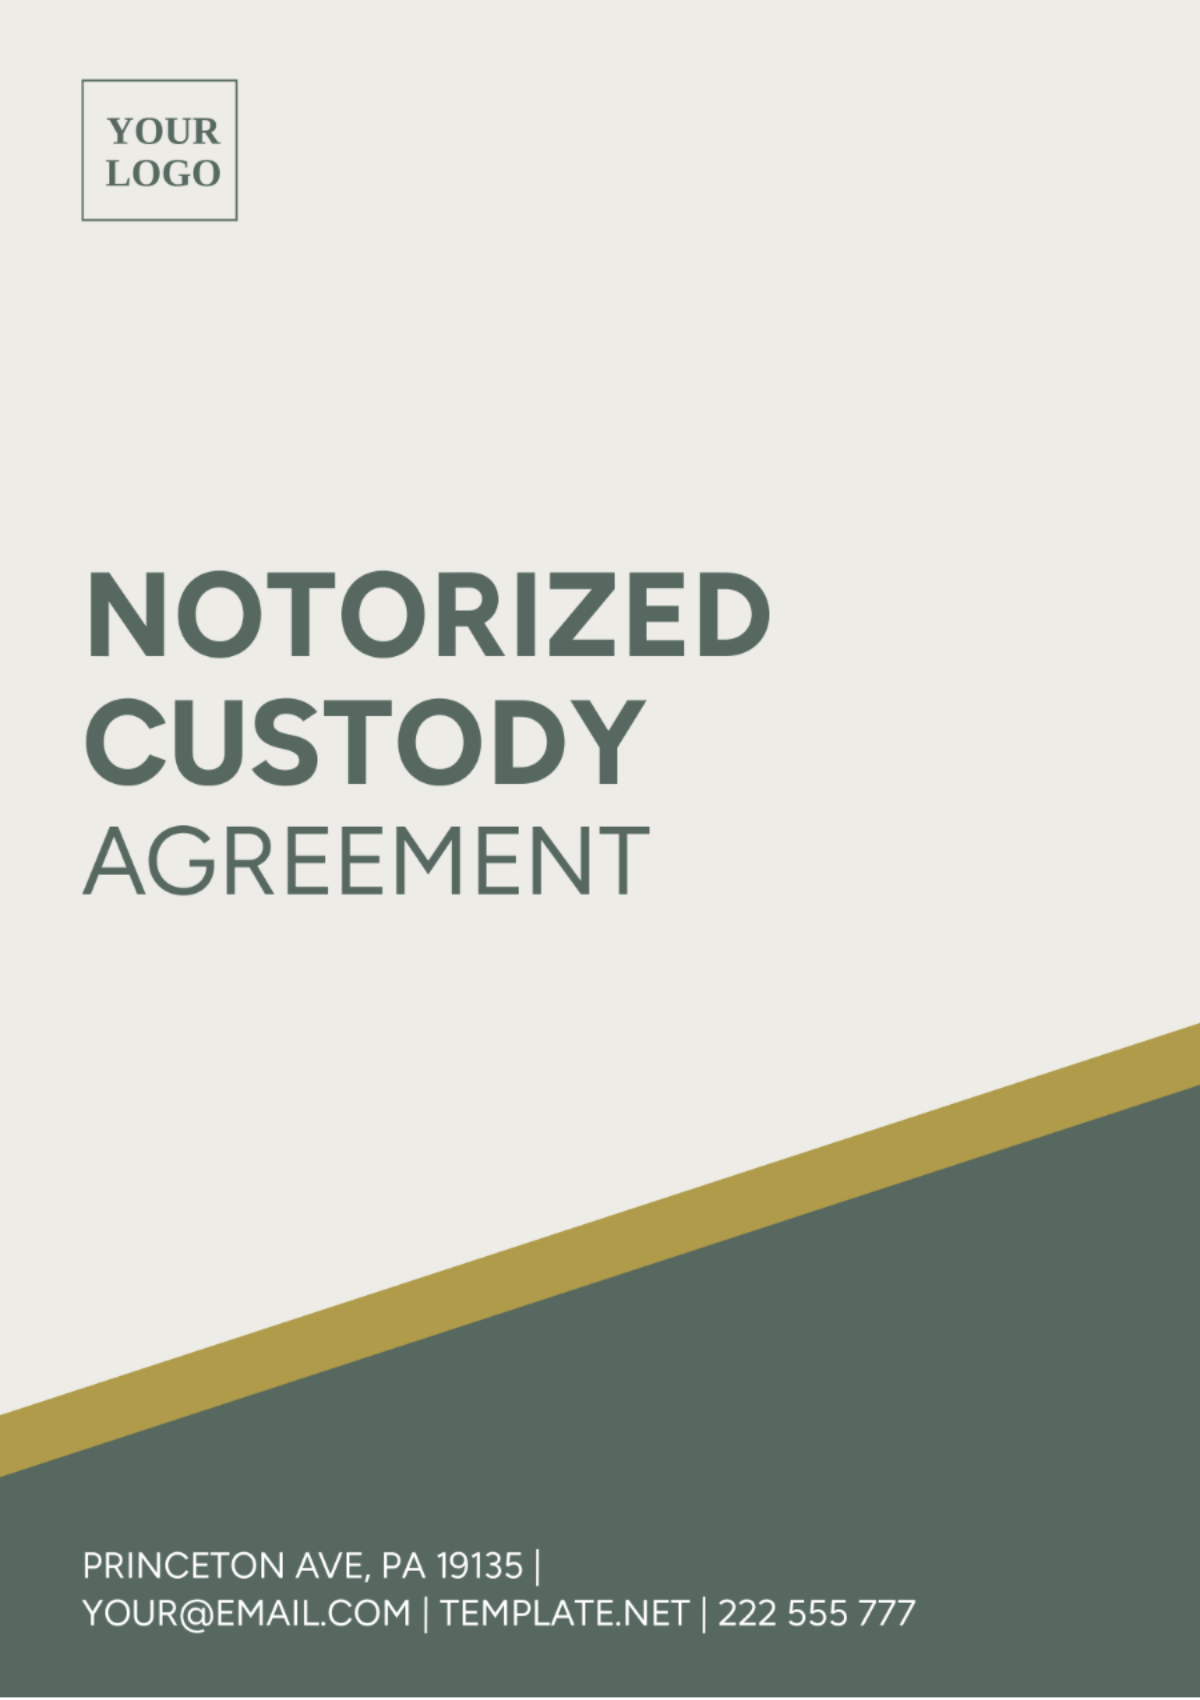 Notarized Custody Agreement Template